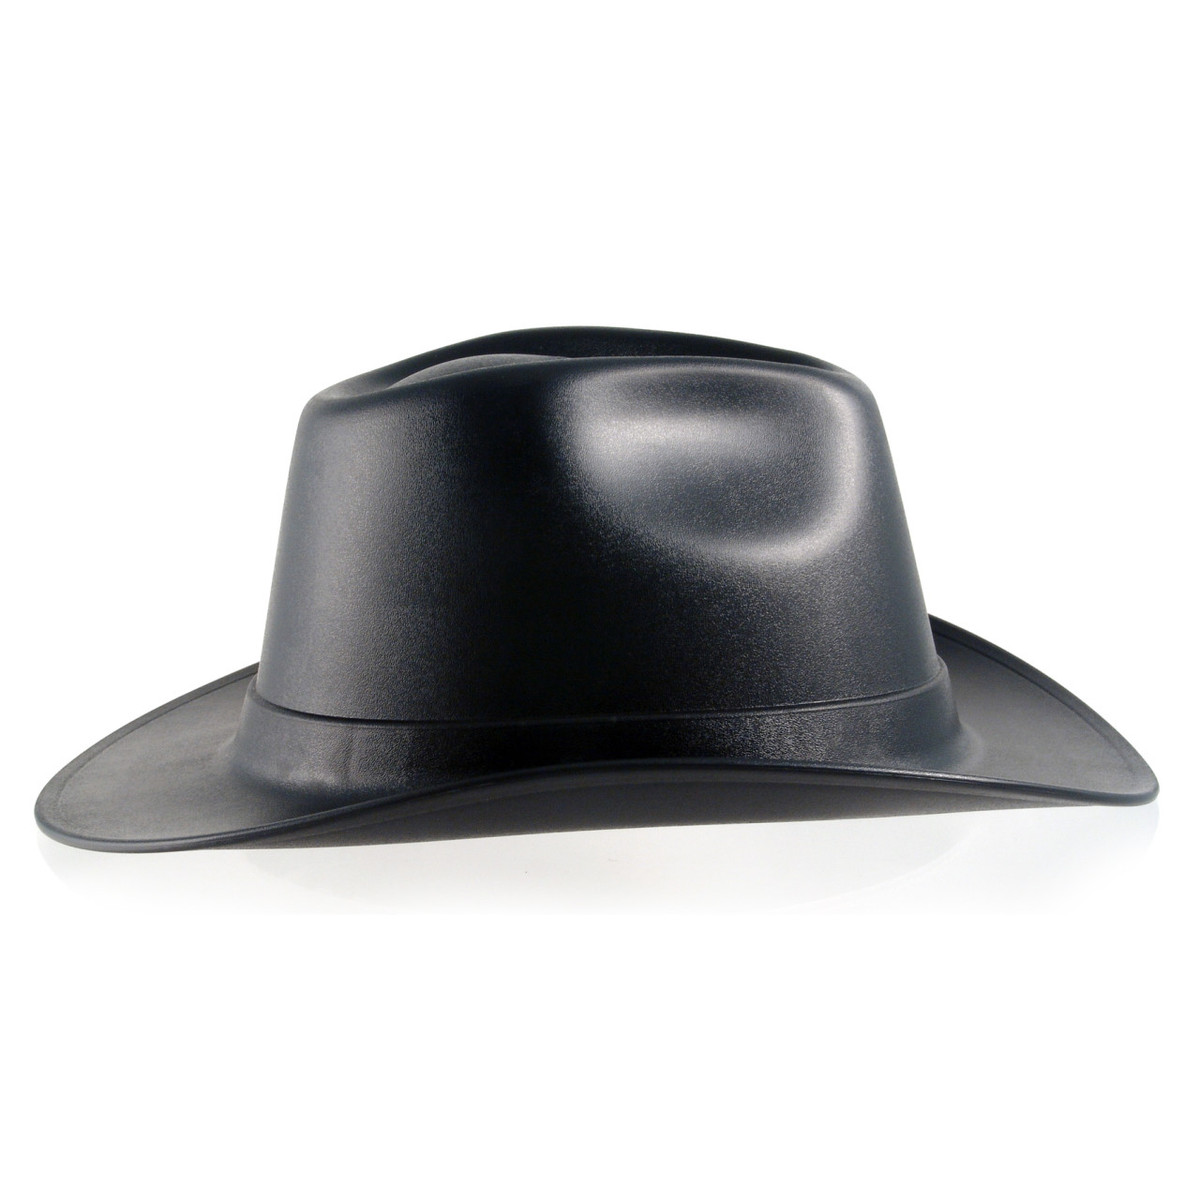 Vulcan Cowboy Hard Hat 6-Point Ratchet Suspension